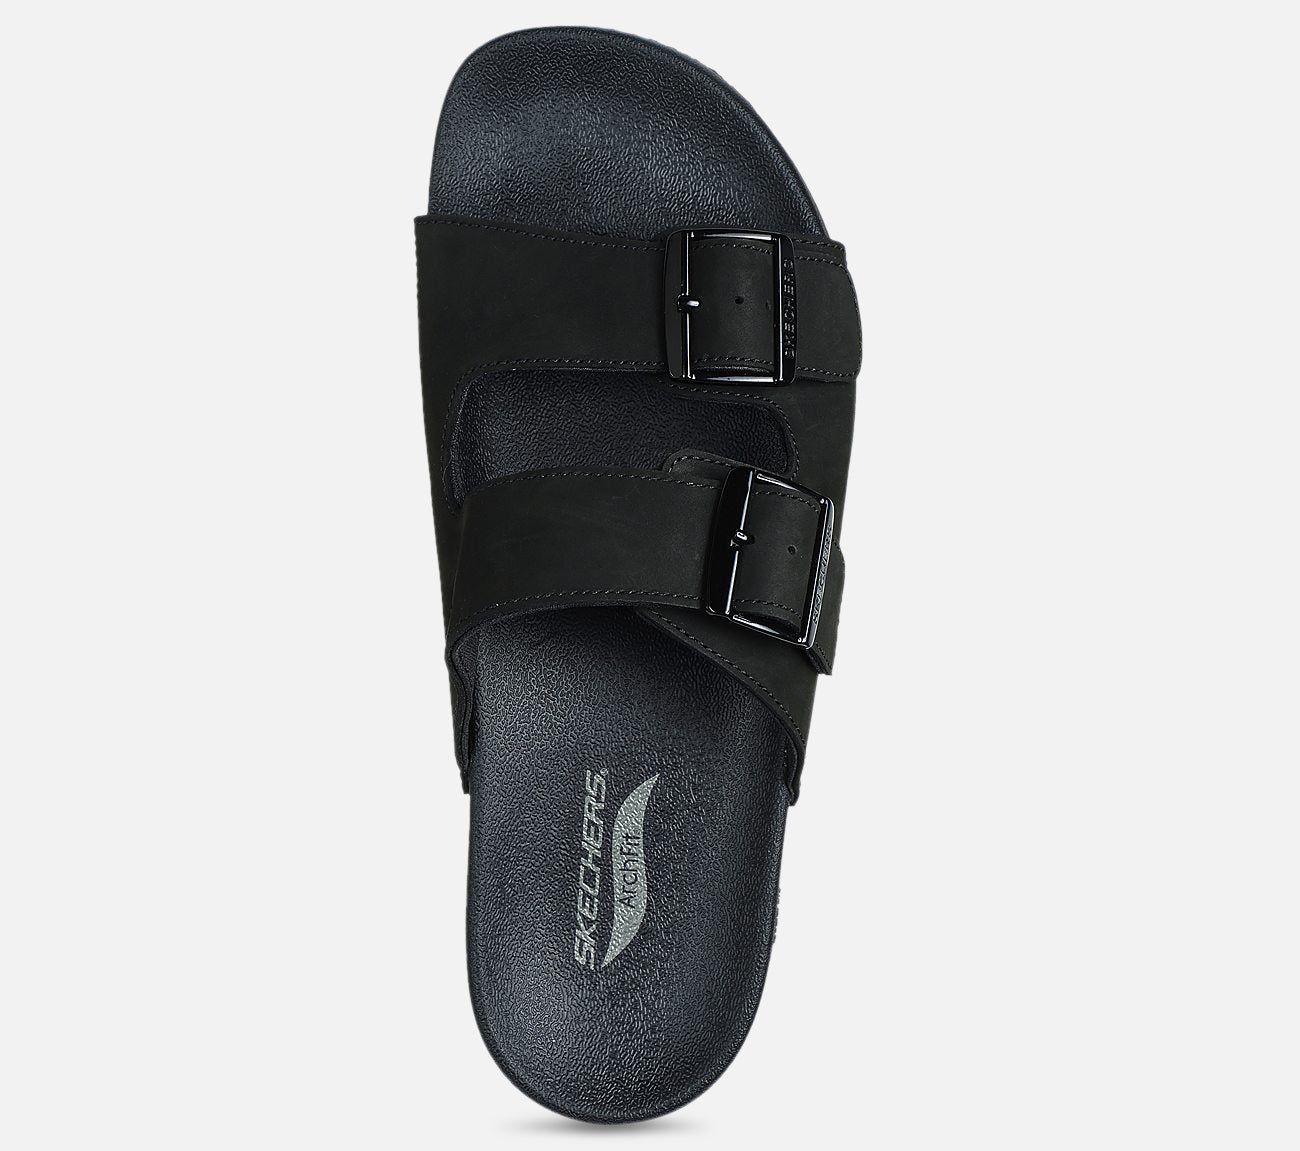 Arch Fit Pro Sandal - Melbourne Sandal Skechers